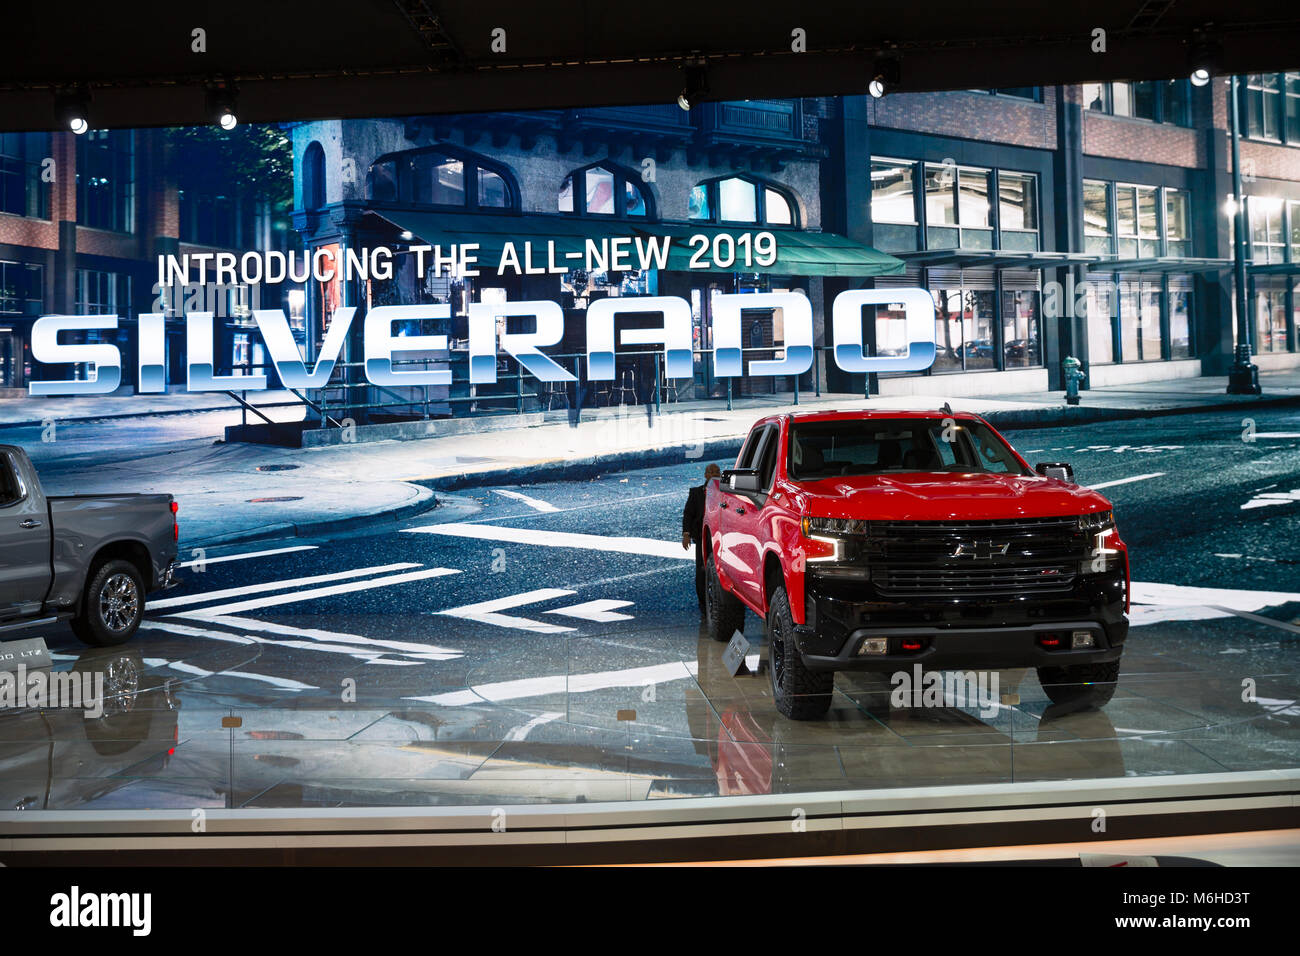 New 2019 Chevrolet Silverado - 2018 Chicago Auto Show Stock Photo